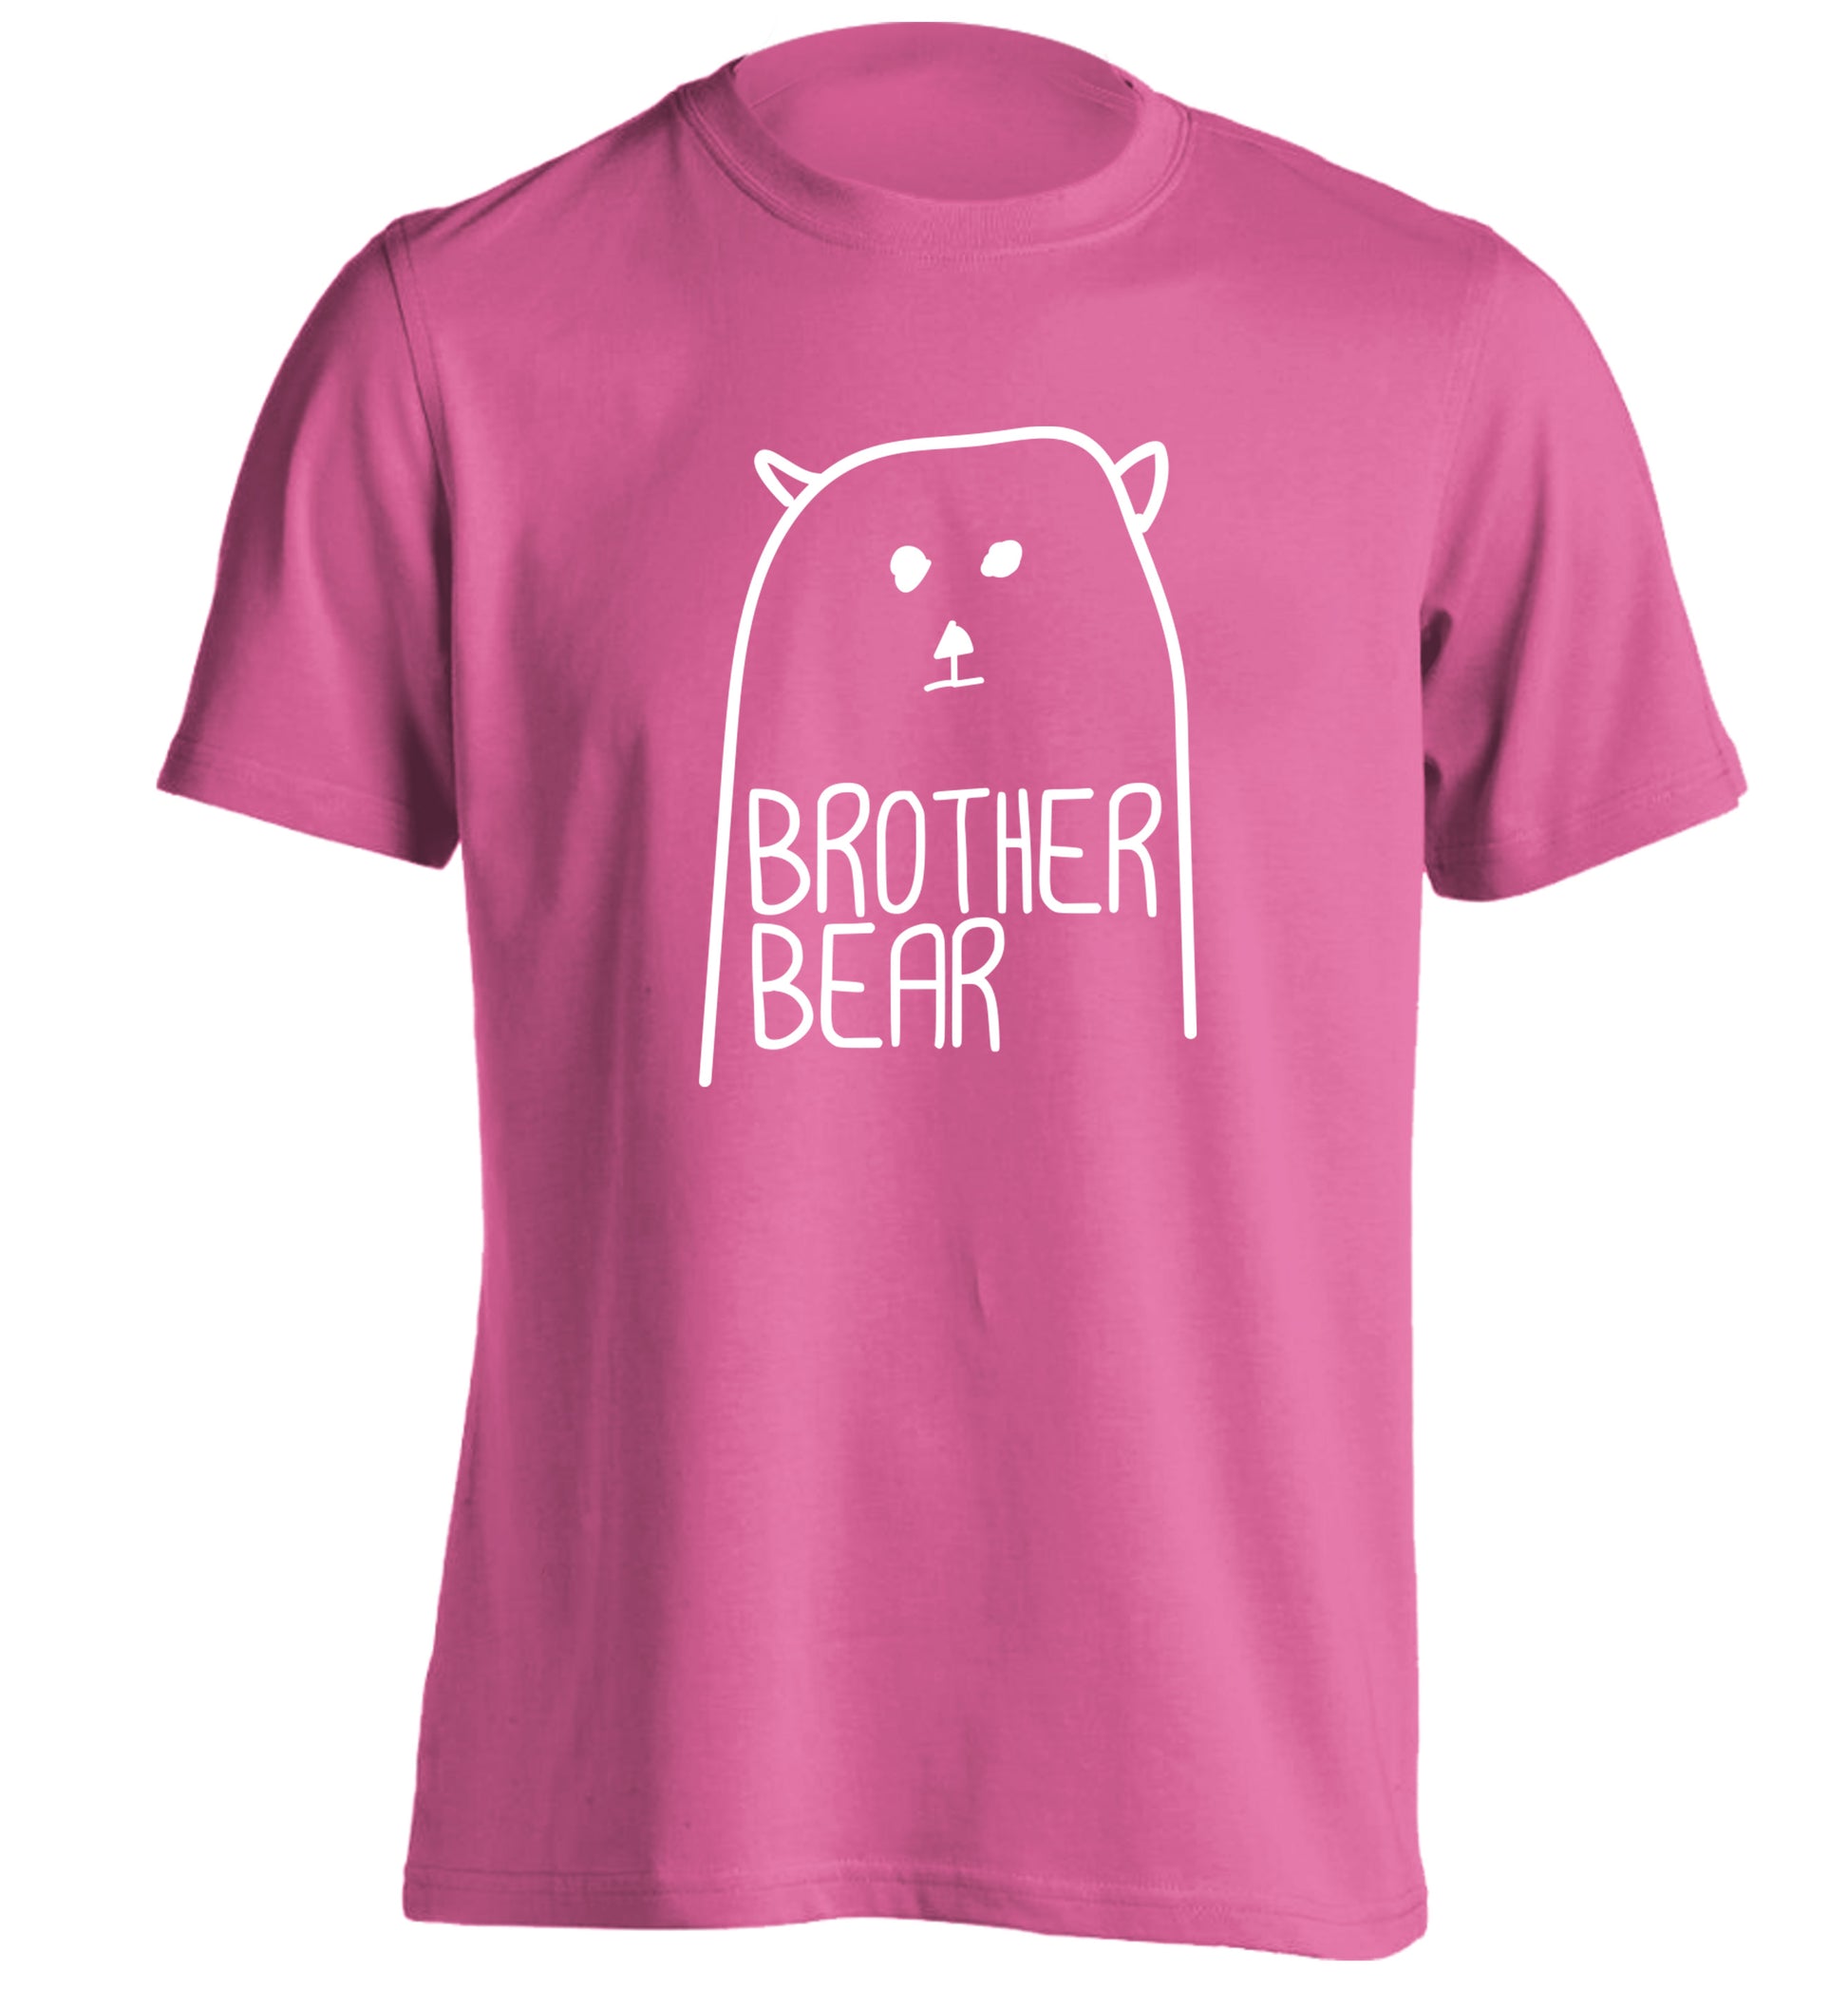 Brother bear adults unisex pink Tshirt 2XL